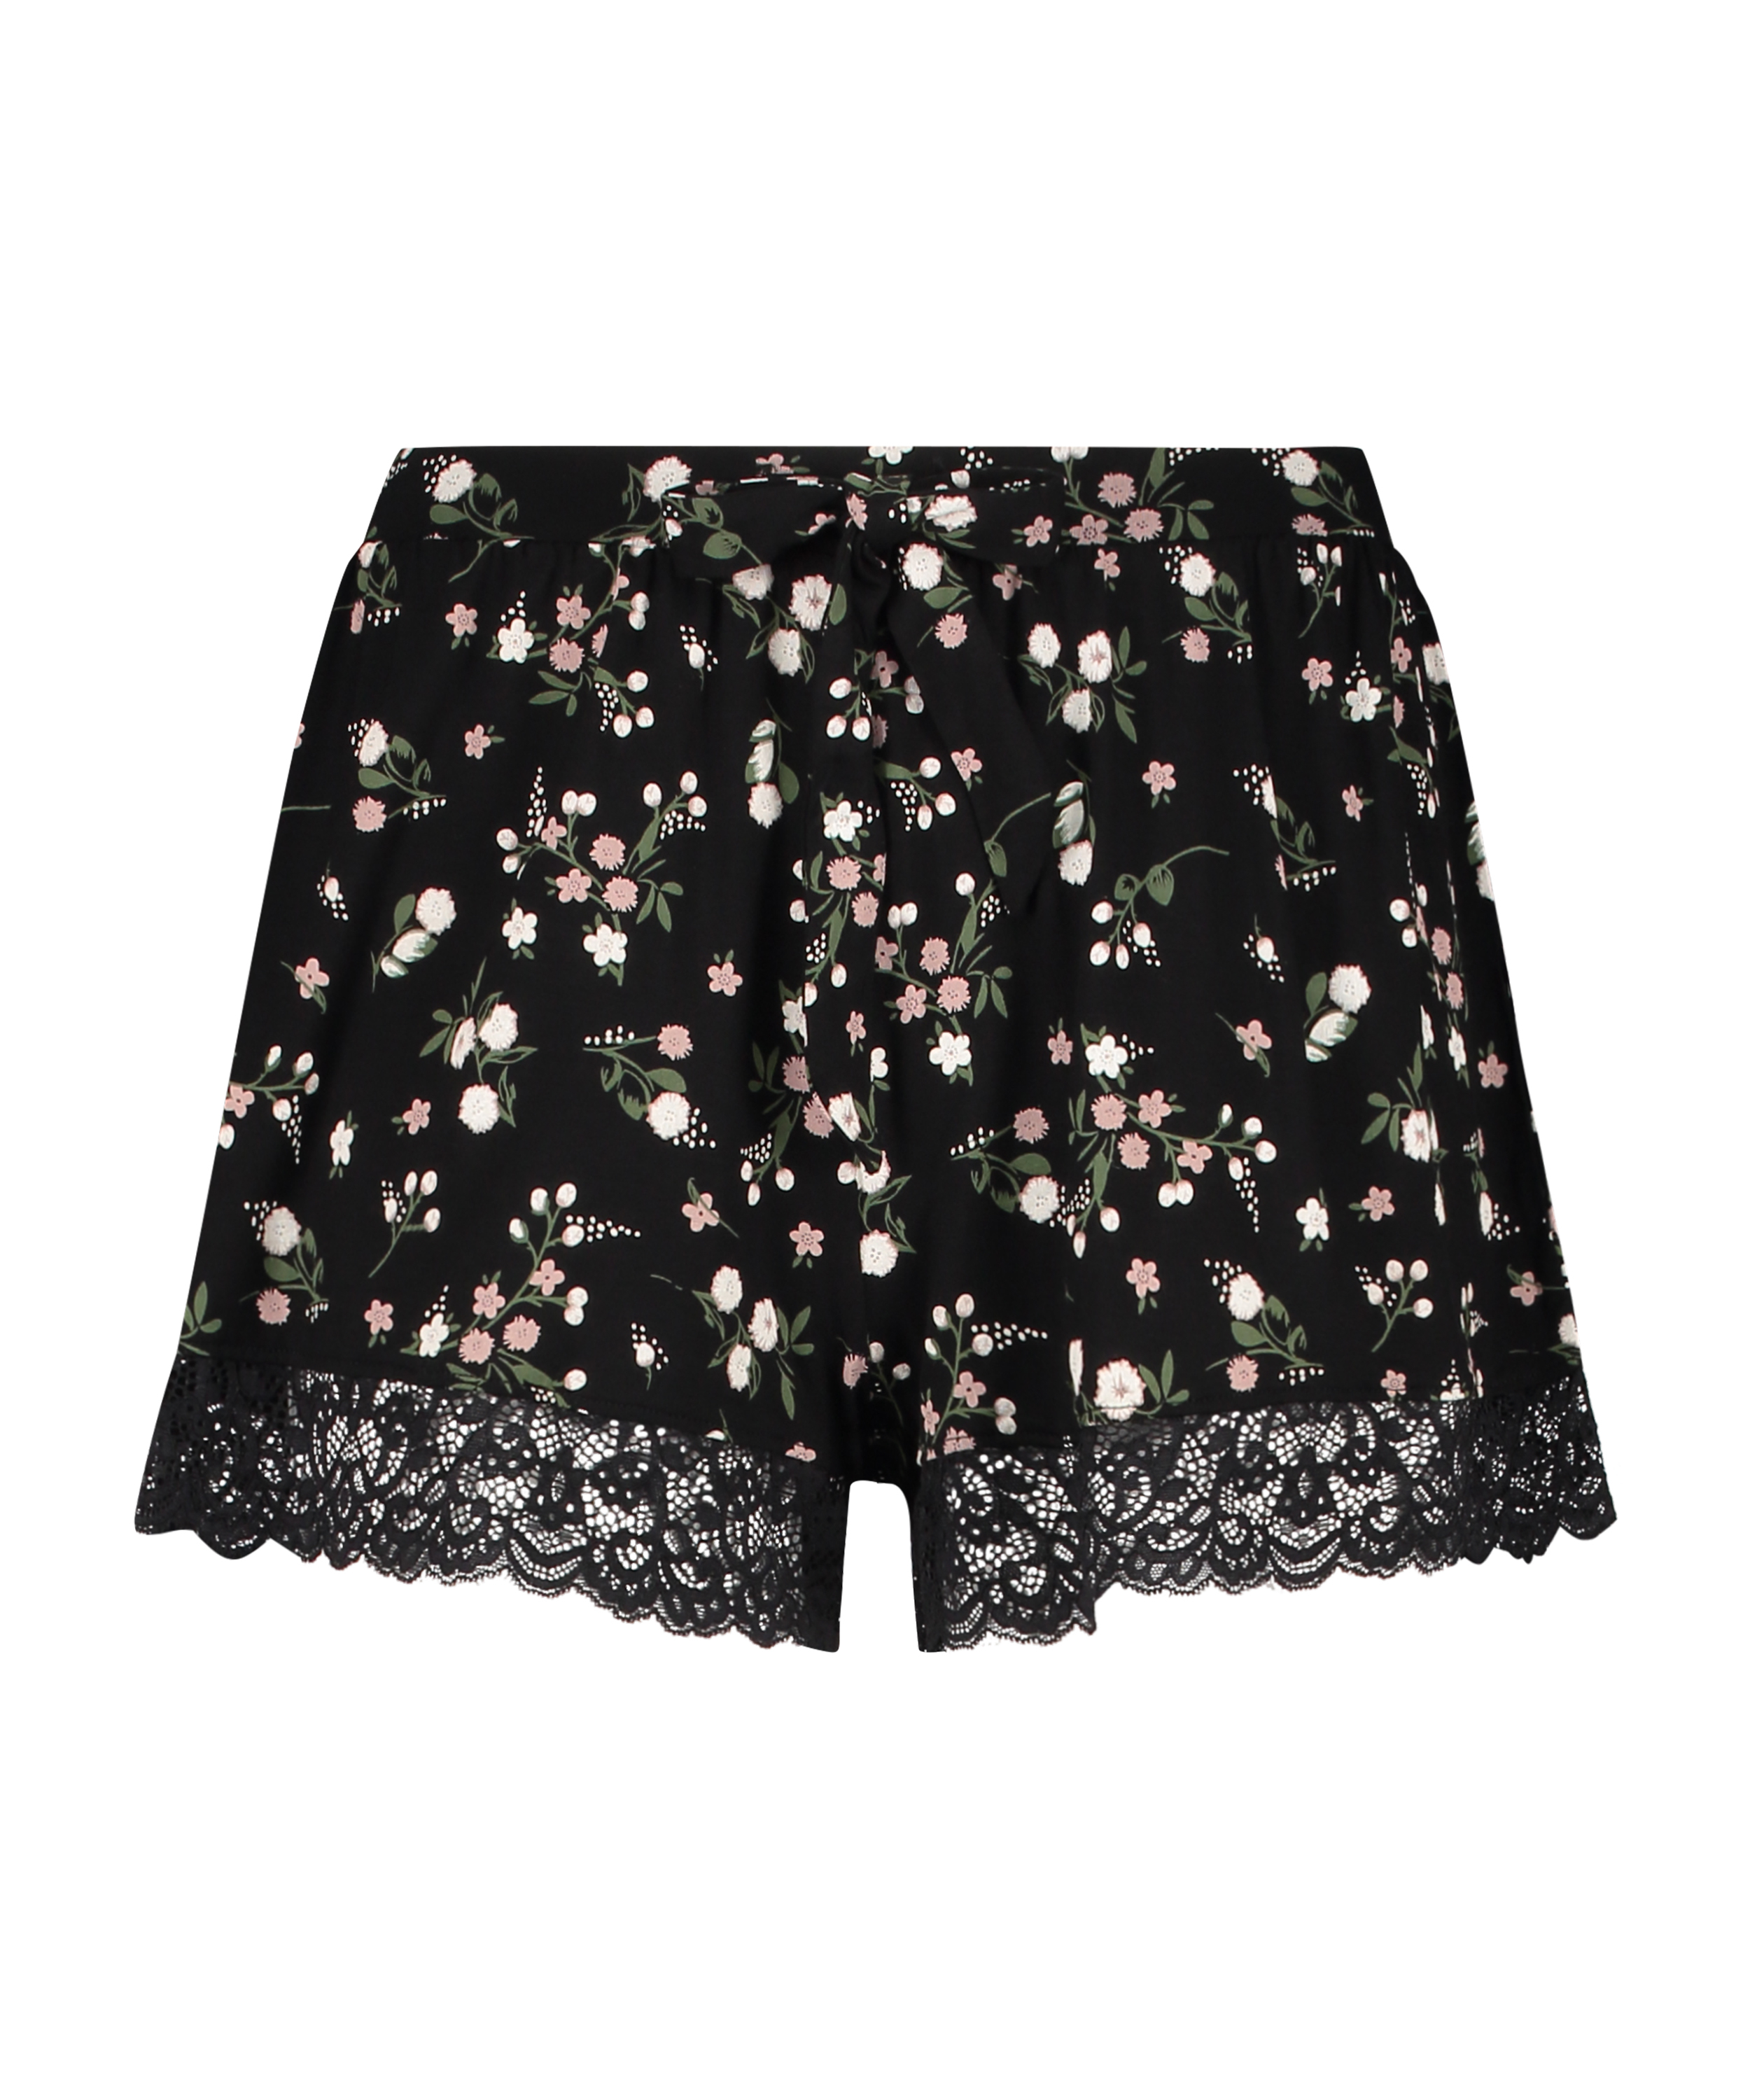 Ditzy Flower shorts, sort, main